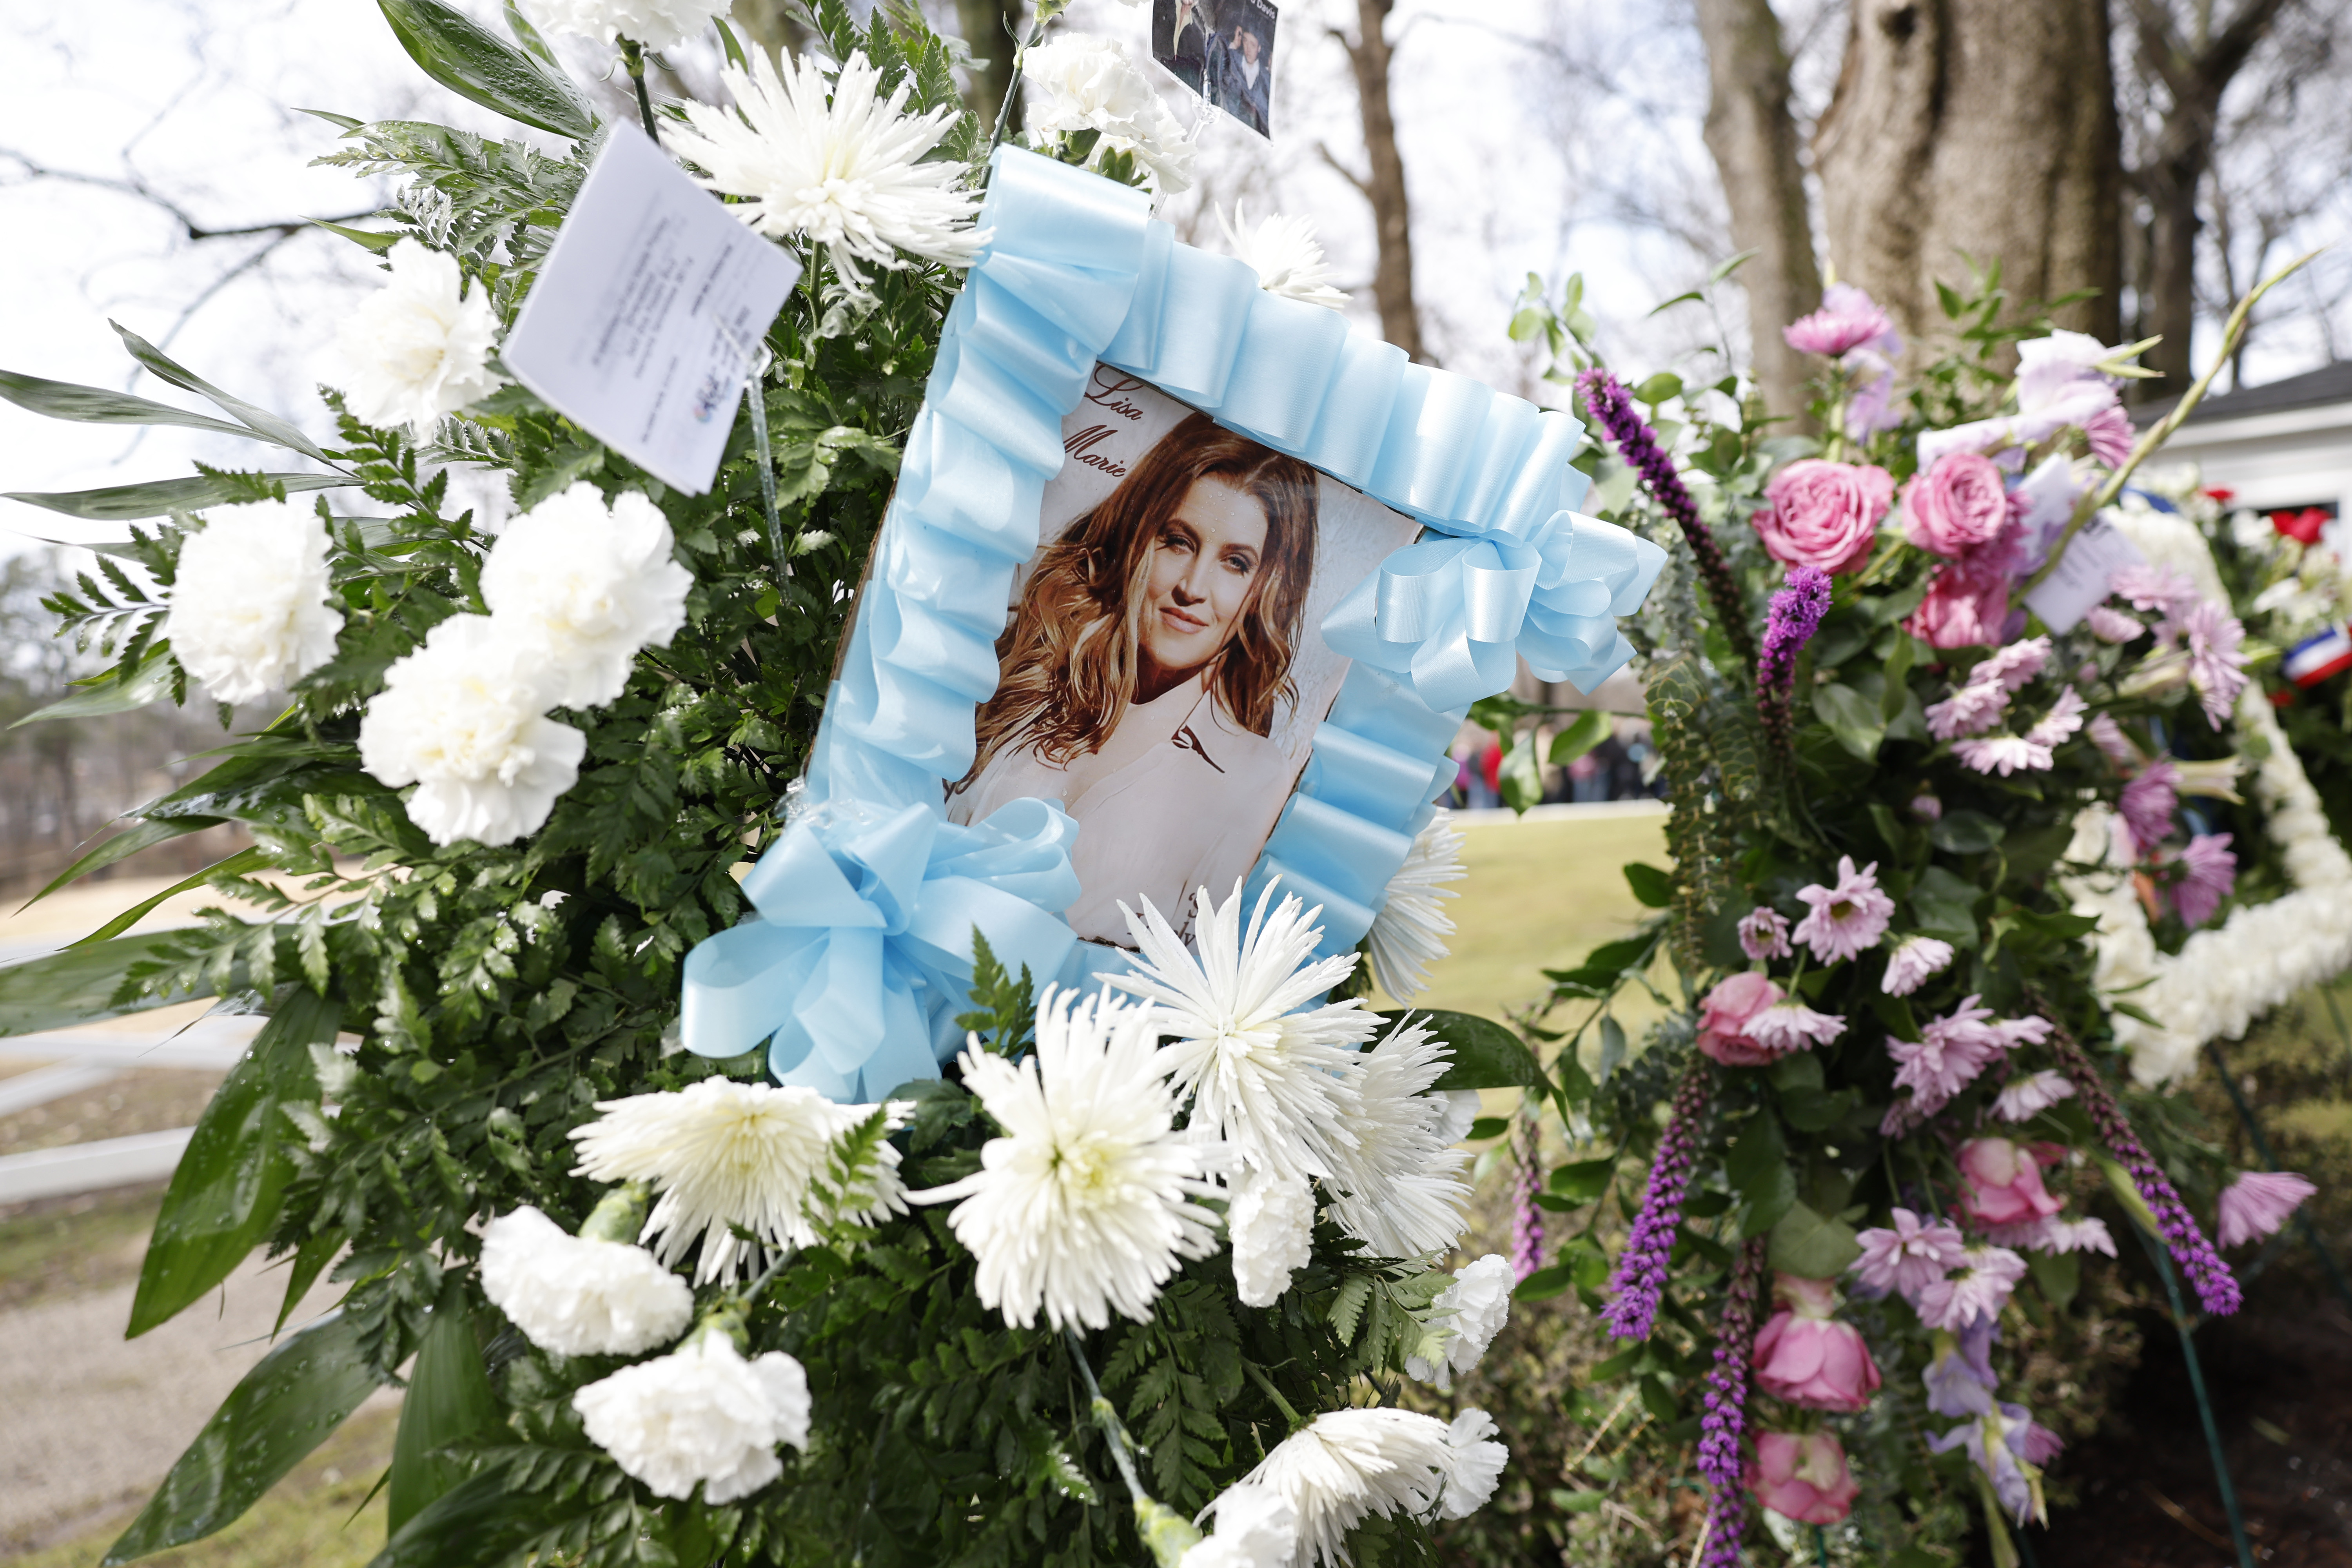 January 22, 2023 Lisa Marie Presley's memorial service at Graceland